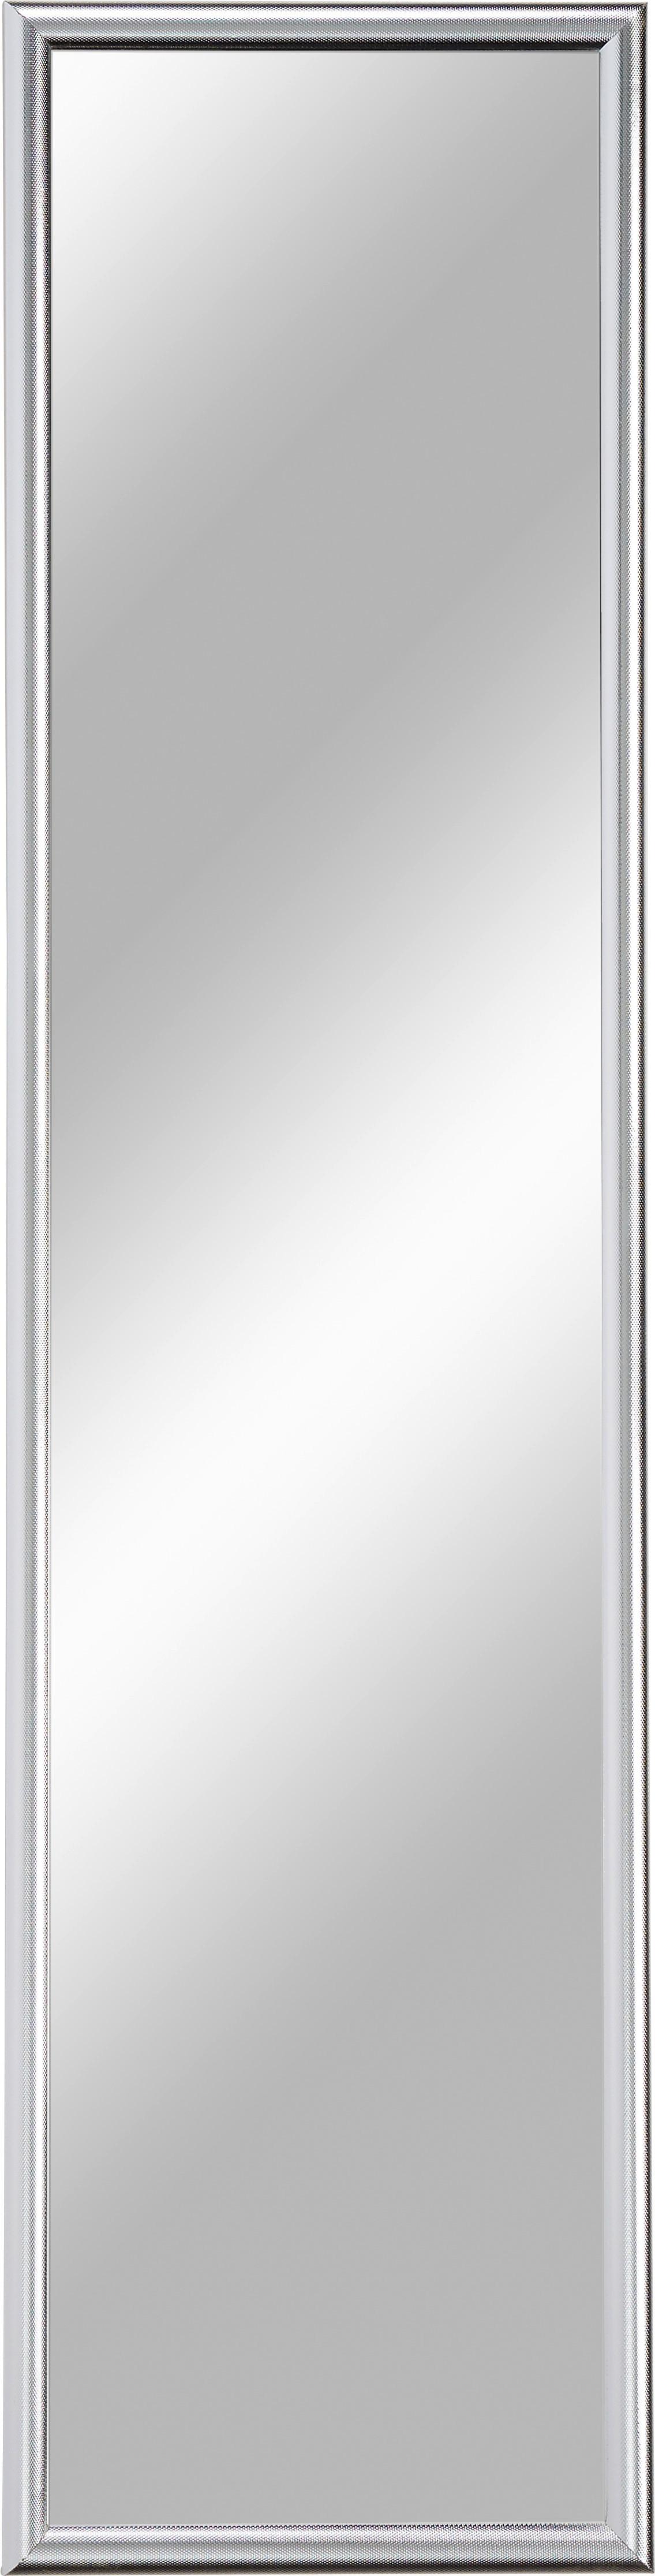 Wandspiegel Fumo BxH: 40x160 cm Mir Rahmen Silber - Silberfarben, MODERN, Glas (40/160cm)